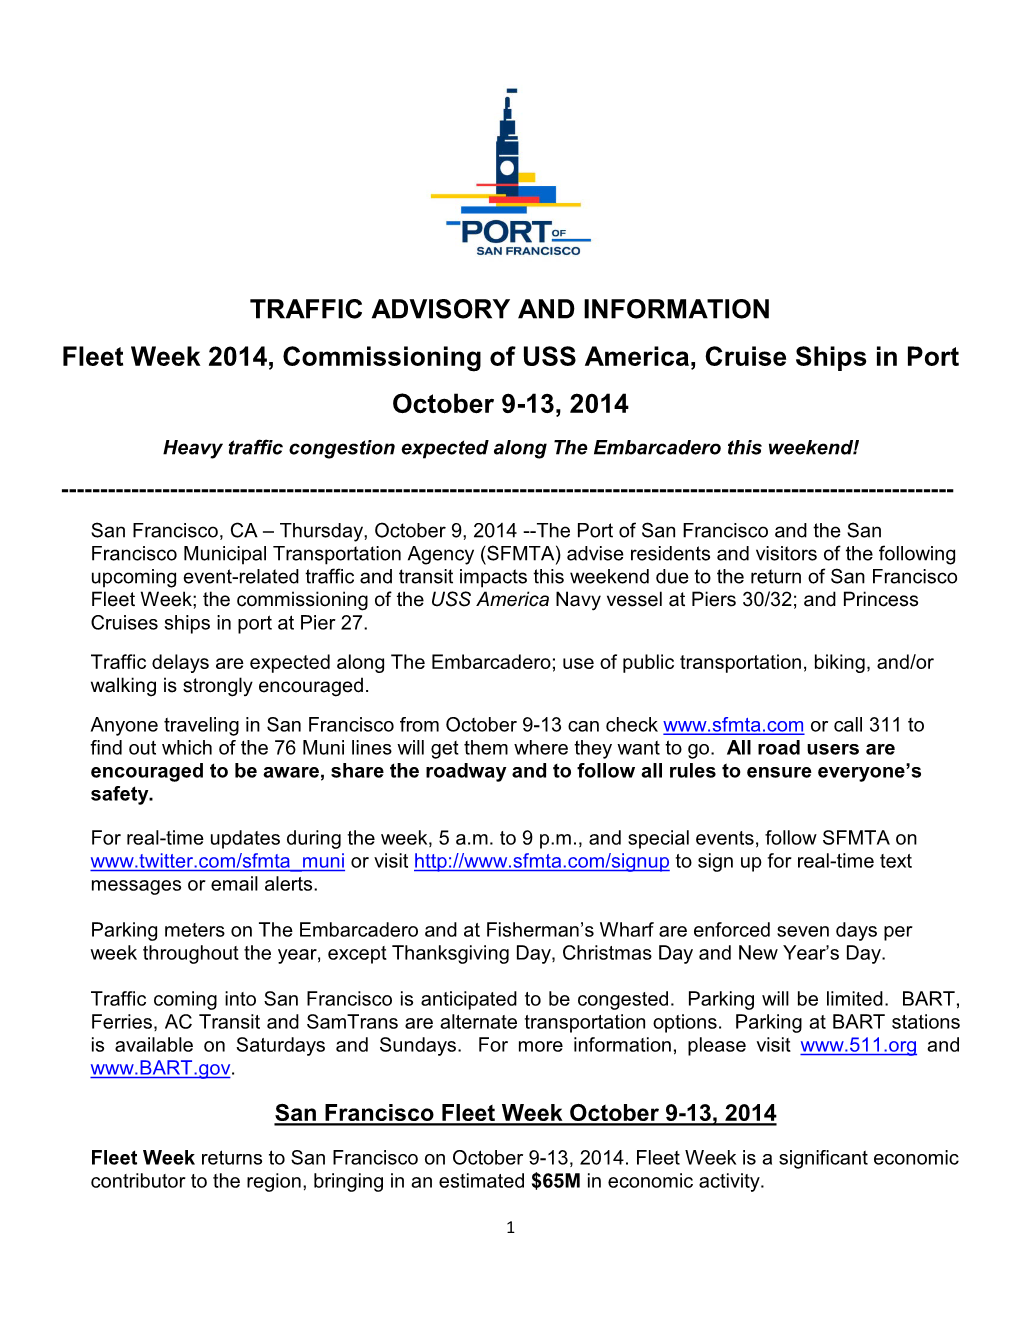 TRAFFIC ADVISORY and INFORMATION Fleet Week 2014